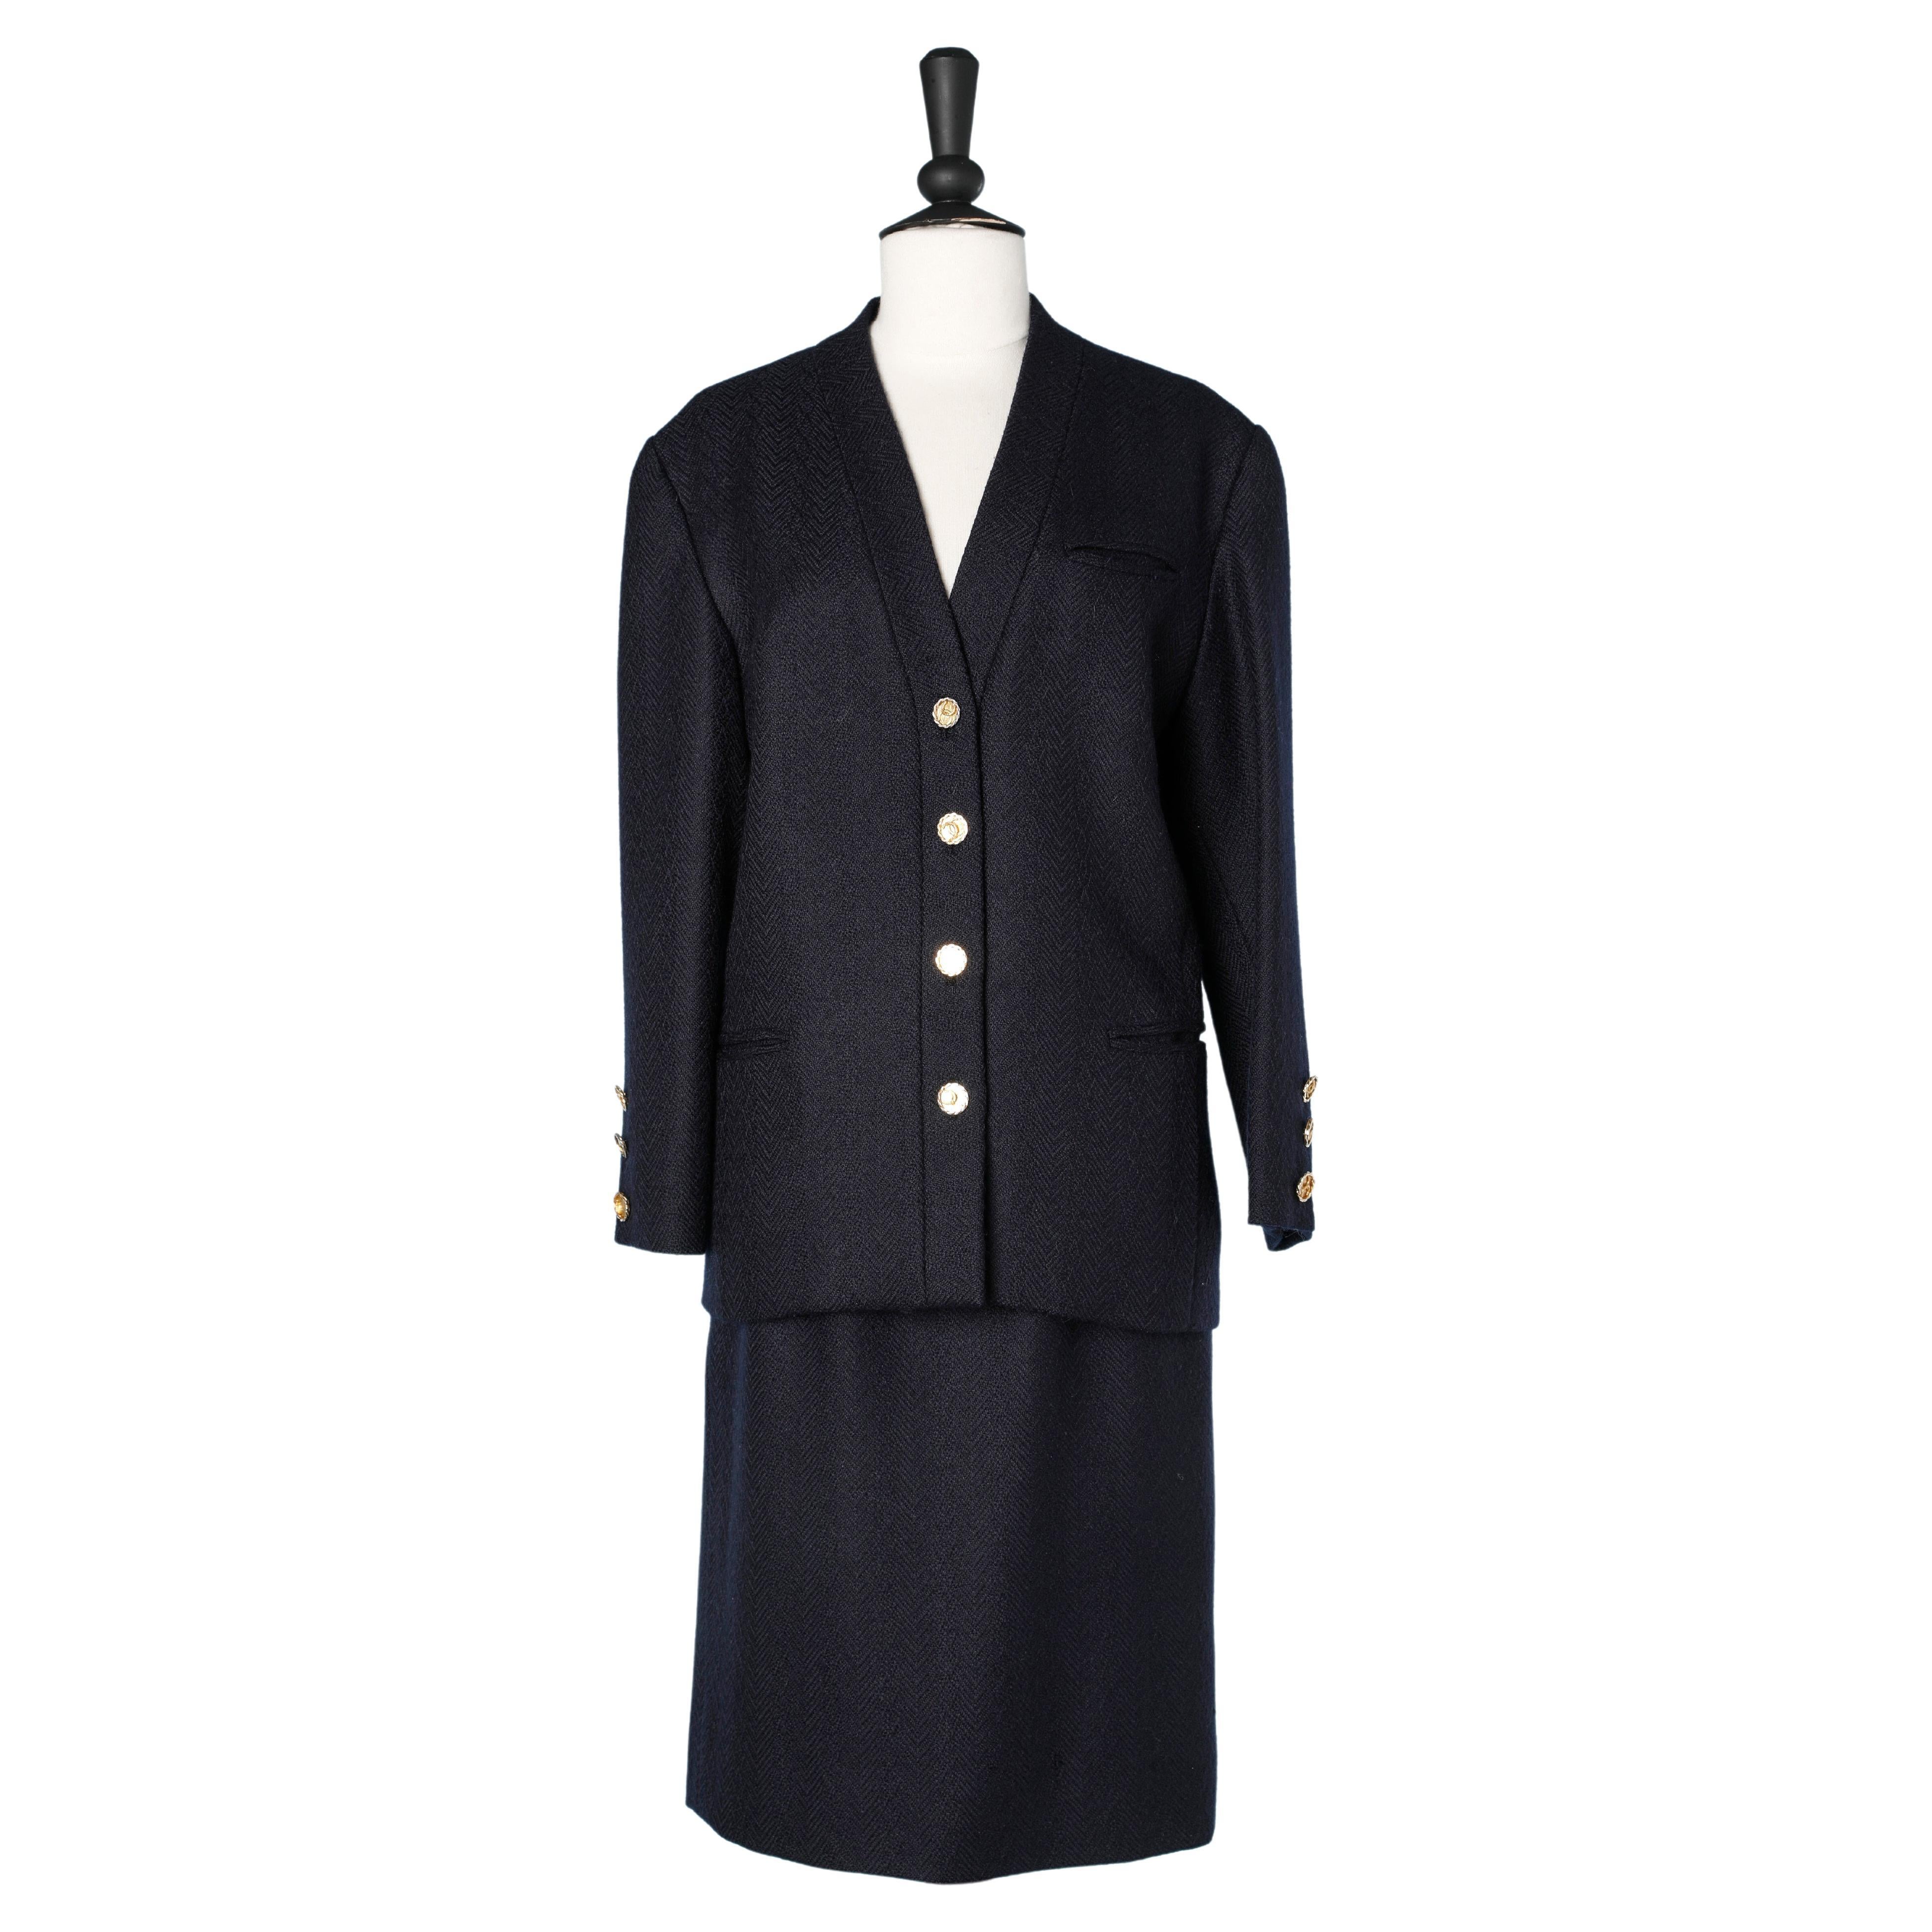 Past auction: Black wool skirt suit, Chanel